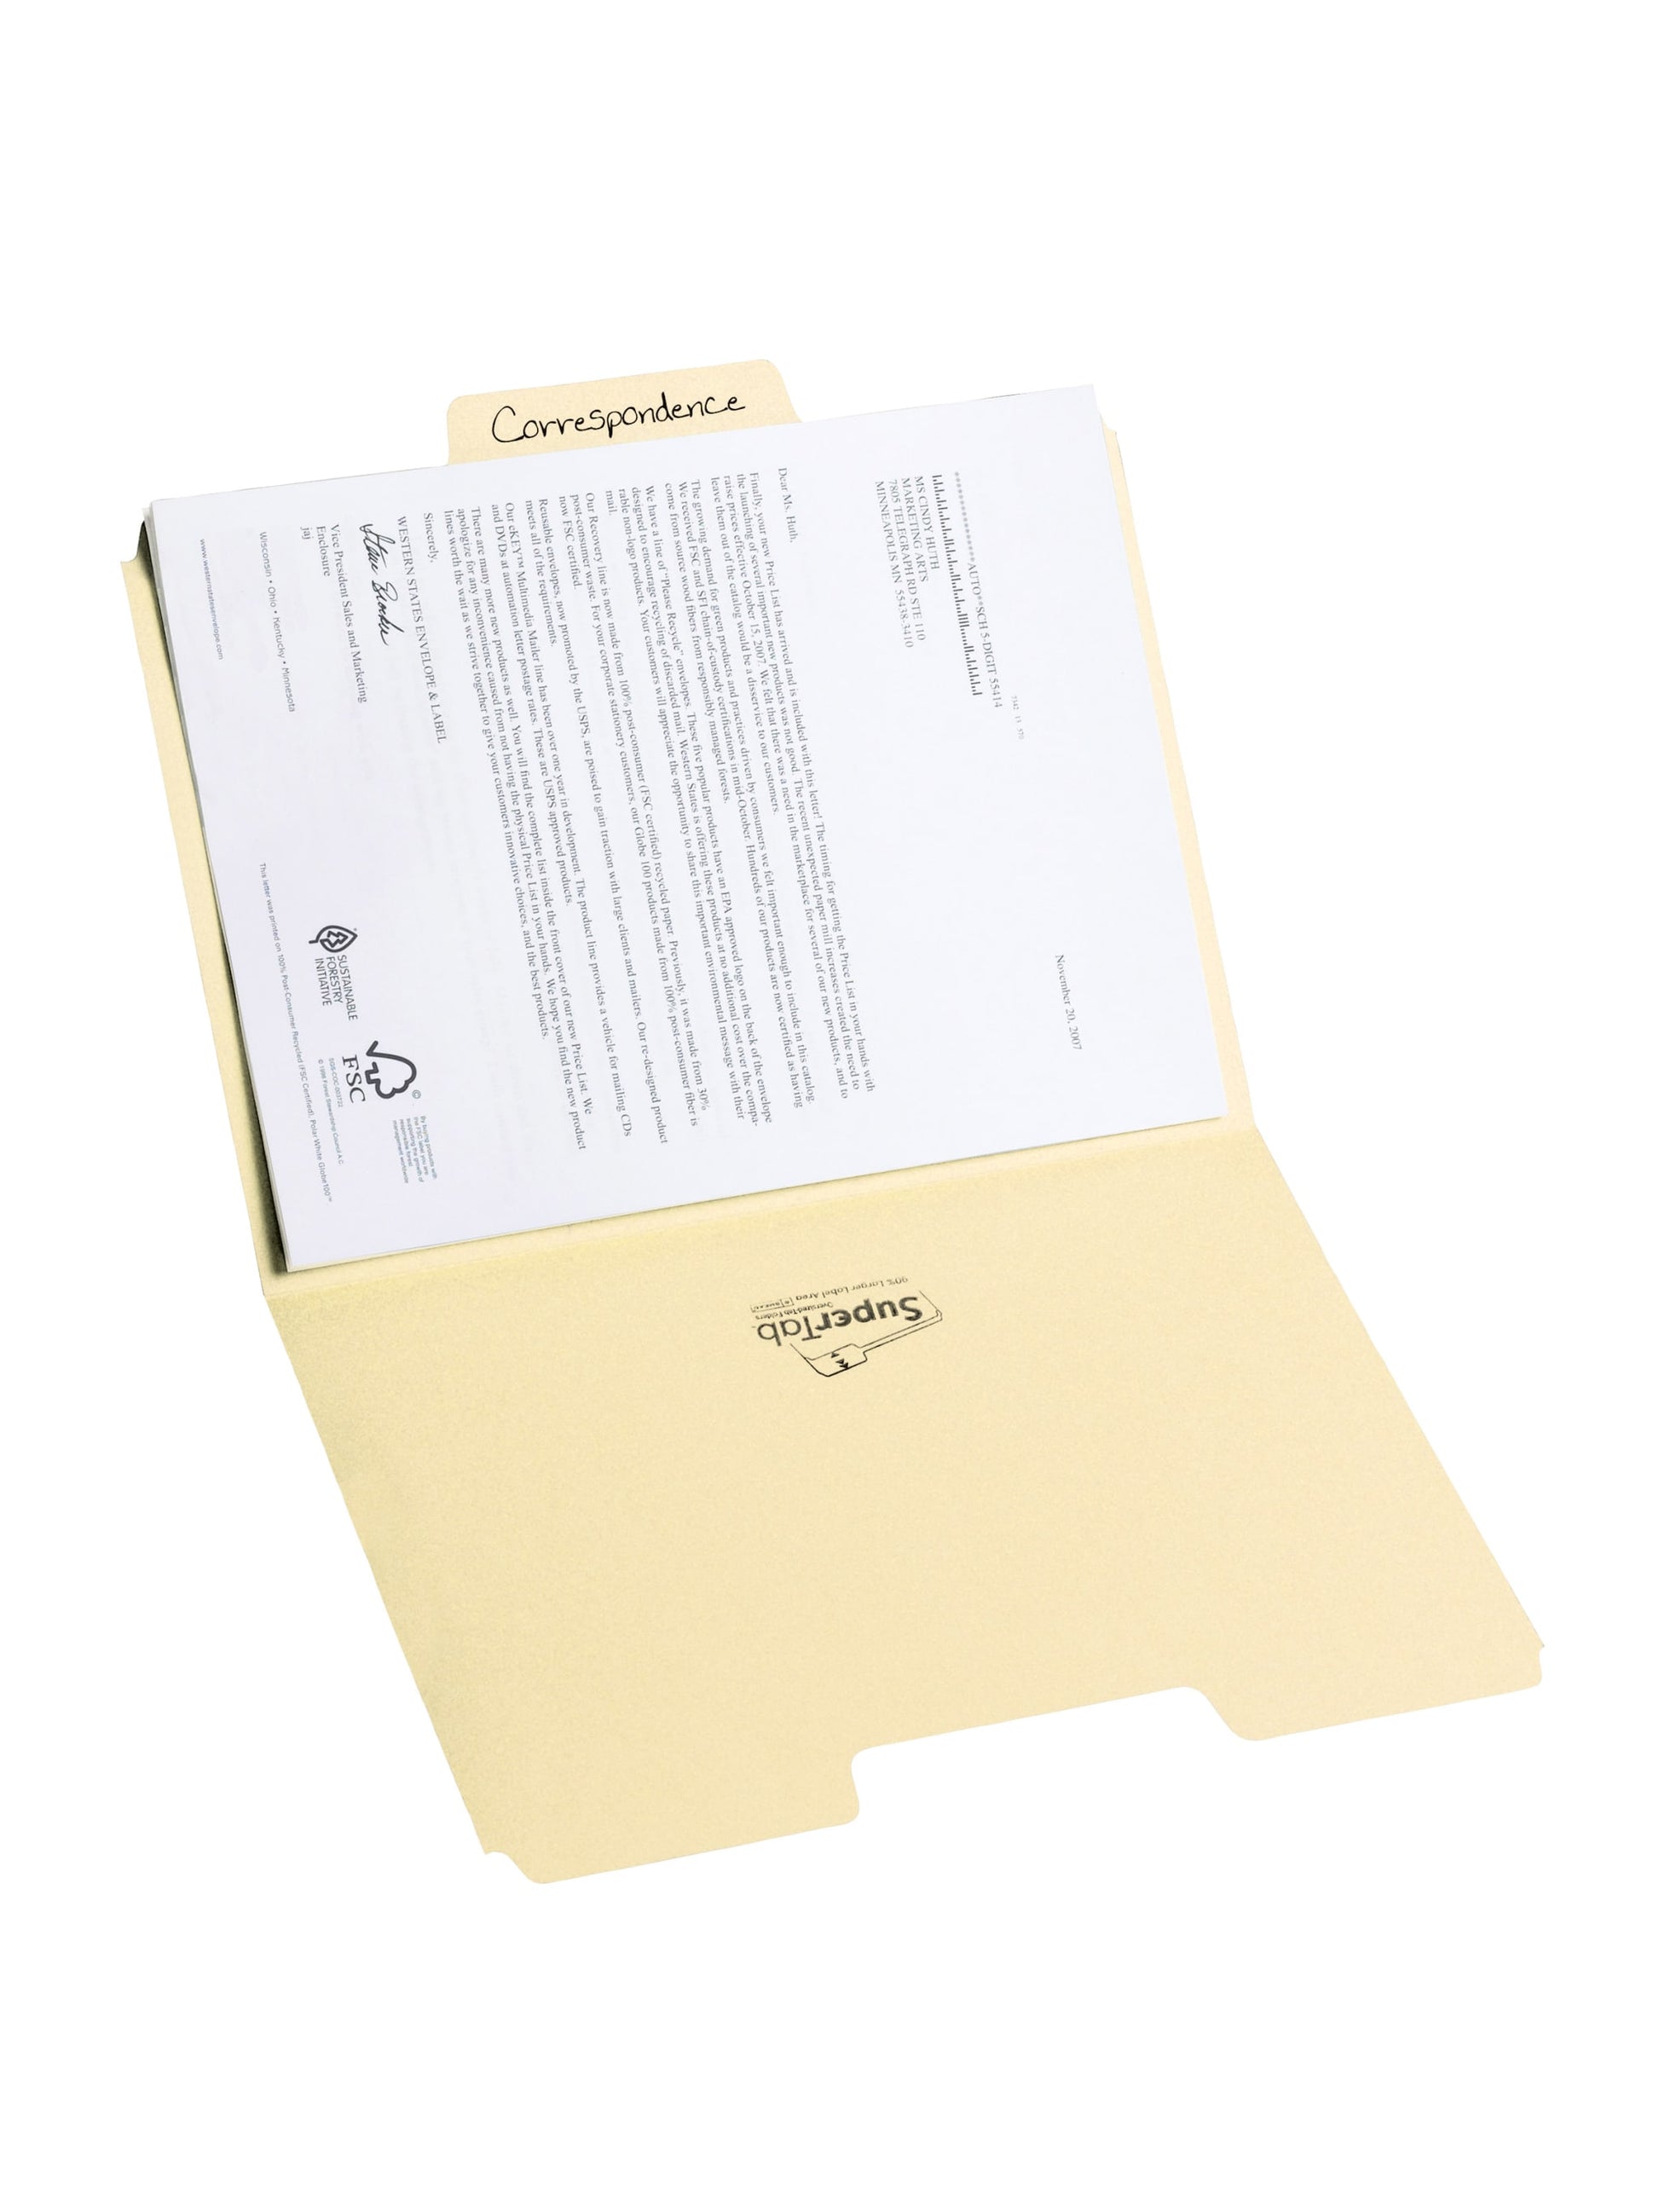 SuperTab® File Folders, 1/3-Cut Tab, Manila Color, Letter Size, Set of 100, 086486103015